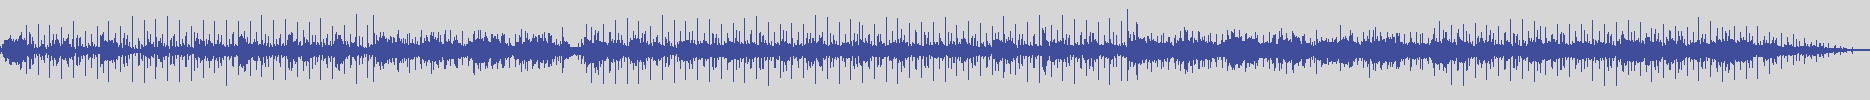 digiphonic_records [DPR008] Salvatore Adamo - Cade La Neve [Original Mix] audio wave form